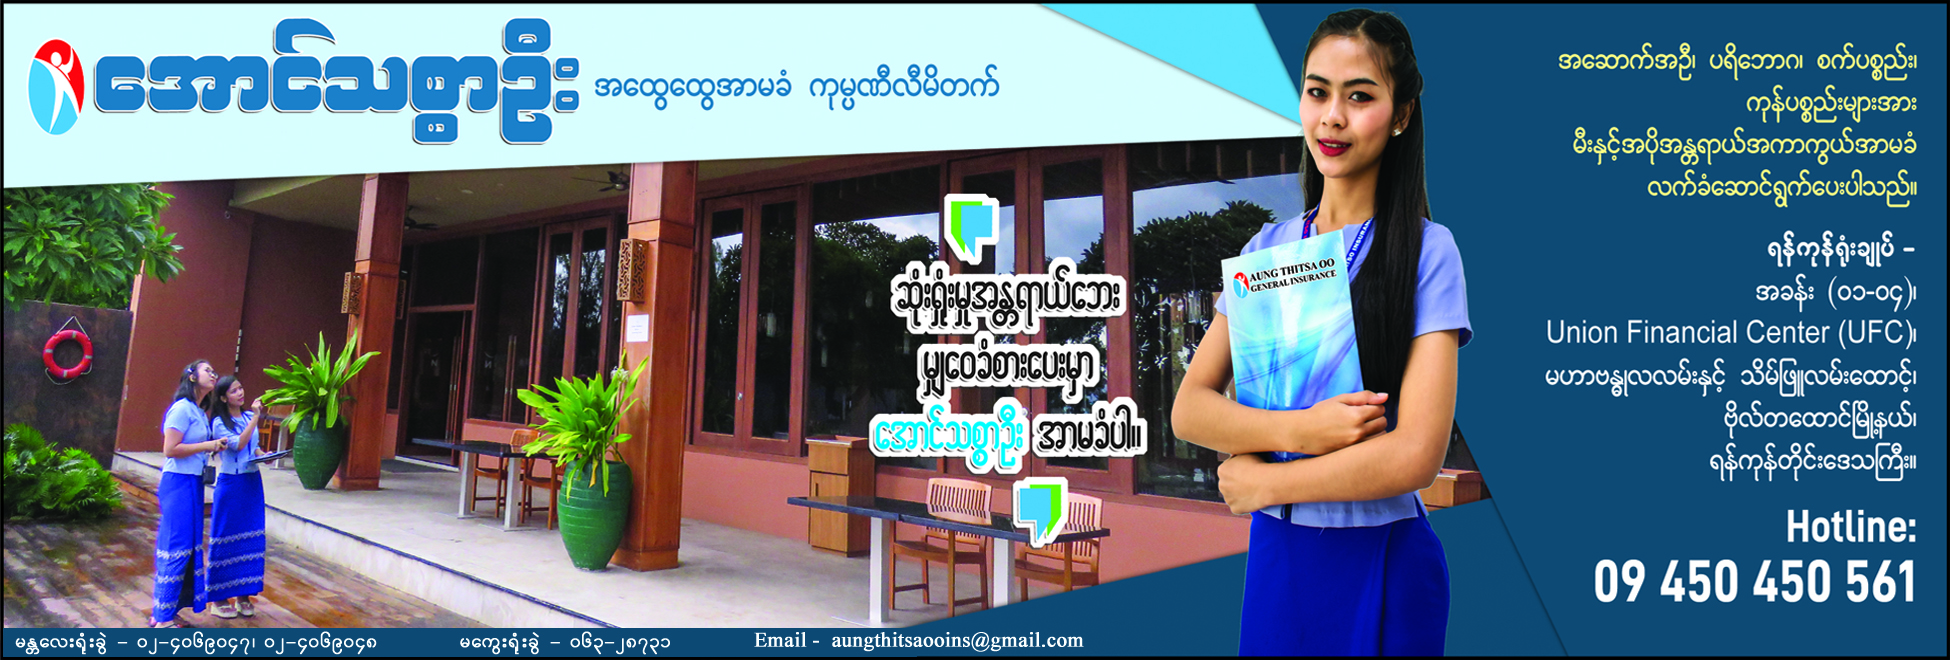 Aung Thitsa Oo Insurance Co., Ltd.